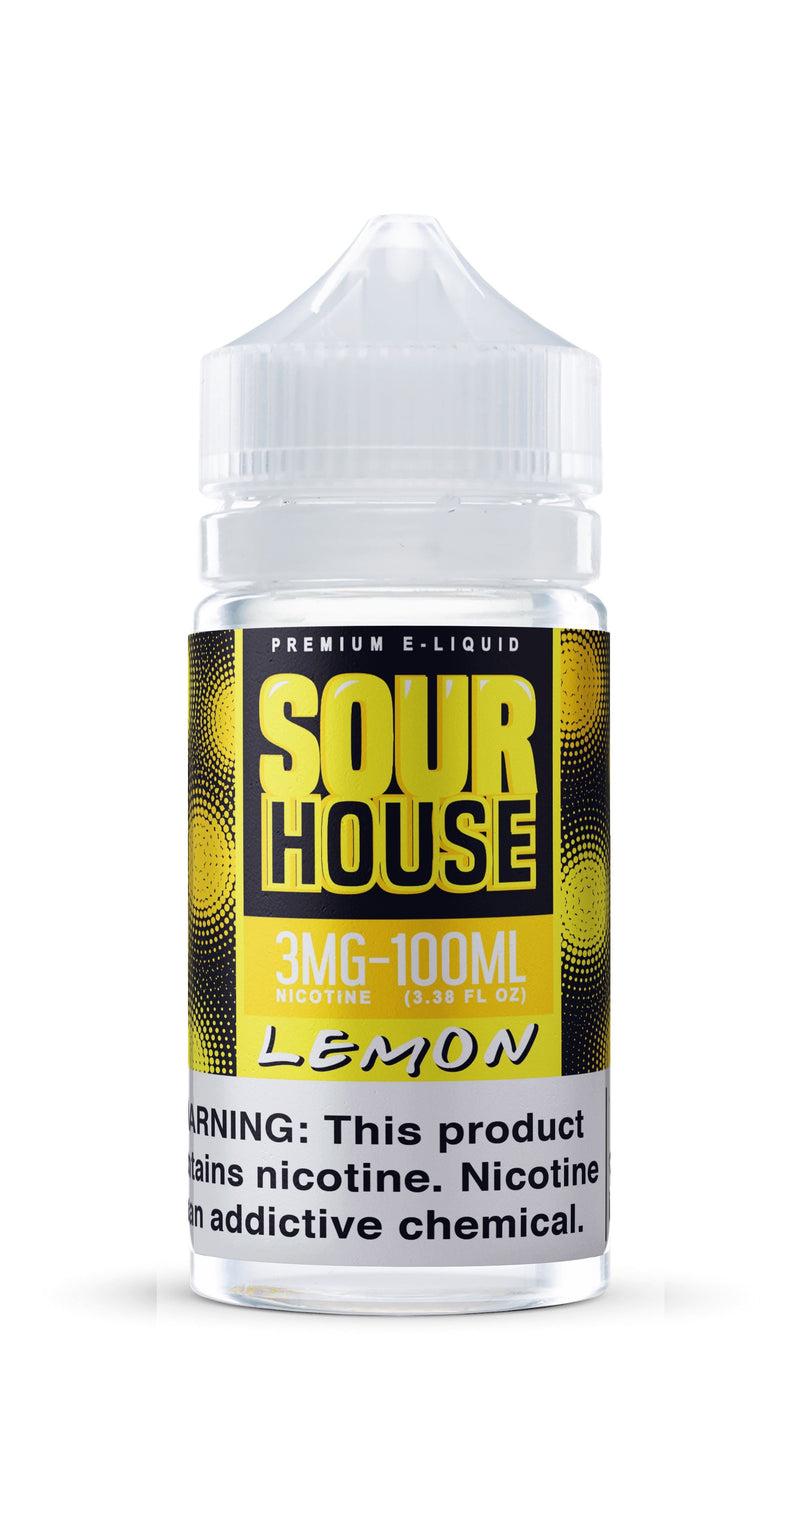 Lemon by Sour House 100ml bottle